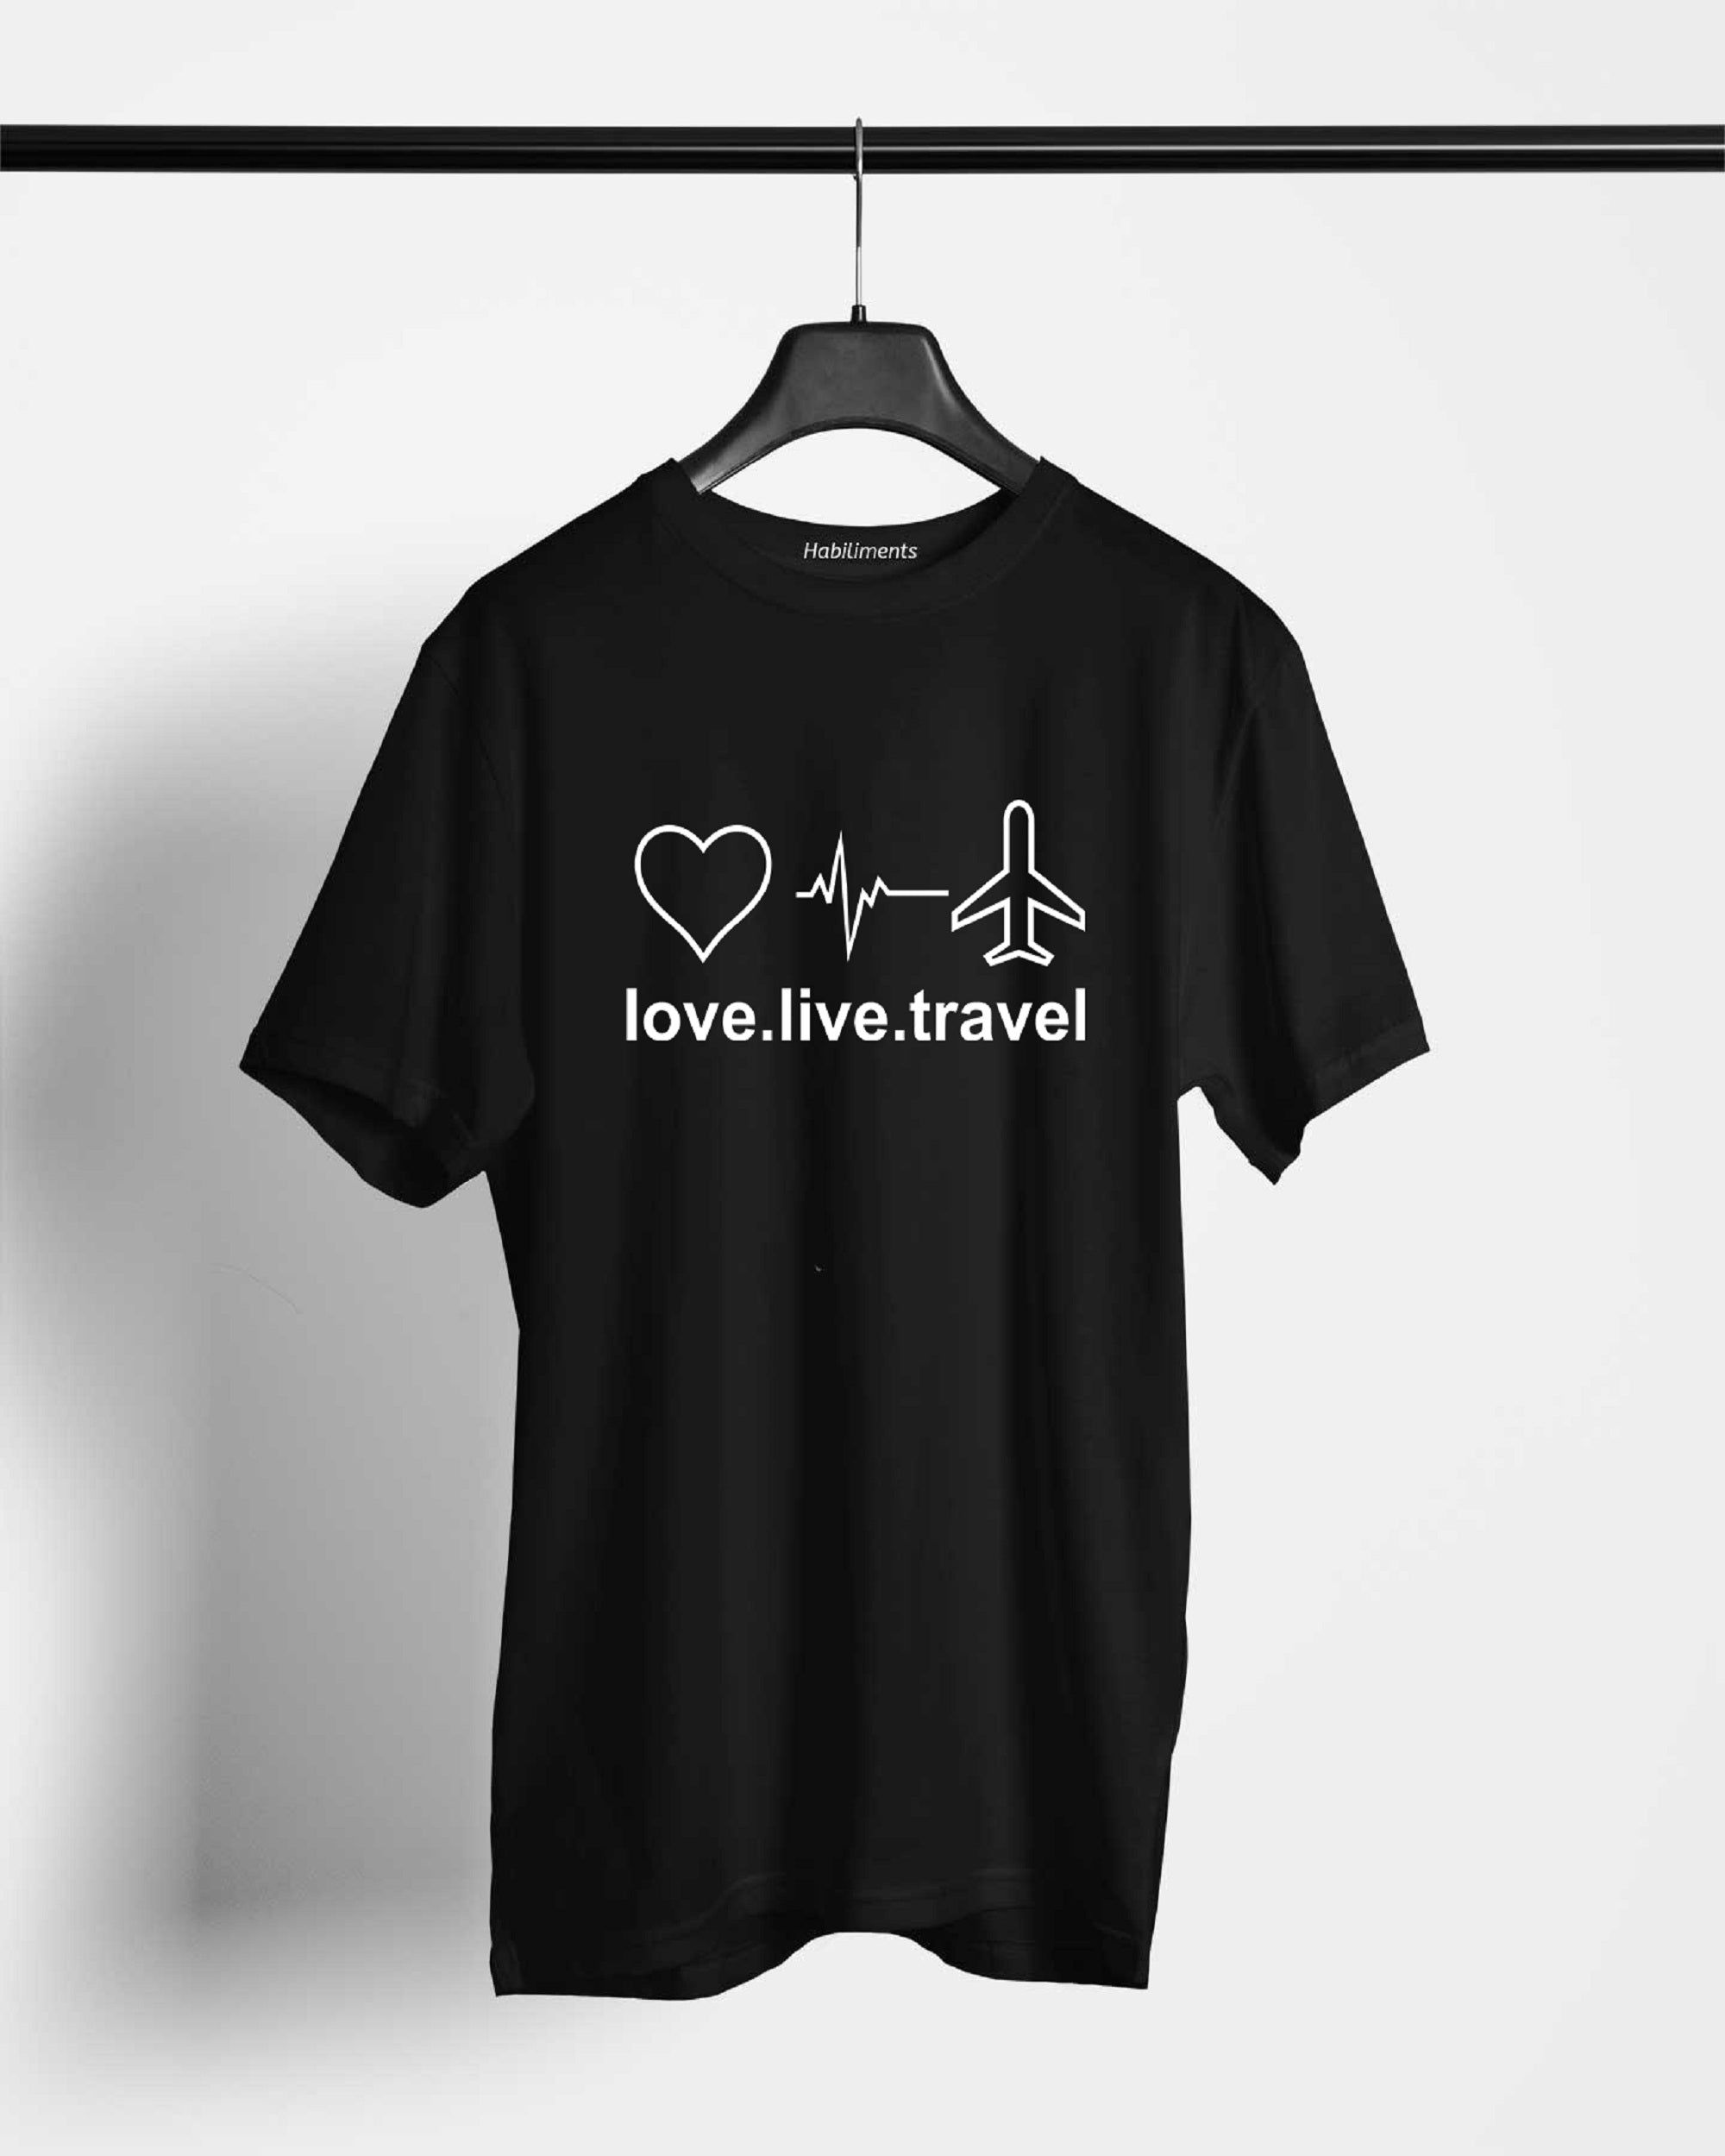 Love live Travel T-Shirts For Men || Black || Stylish Tshirts || 100% Cotton || Best T-Shirt For Men's